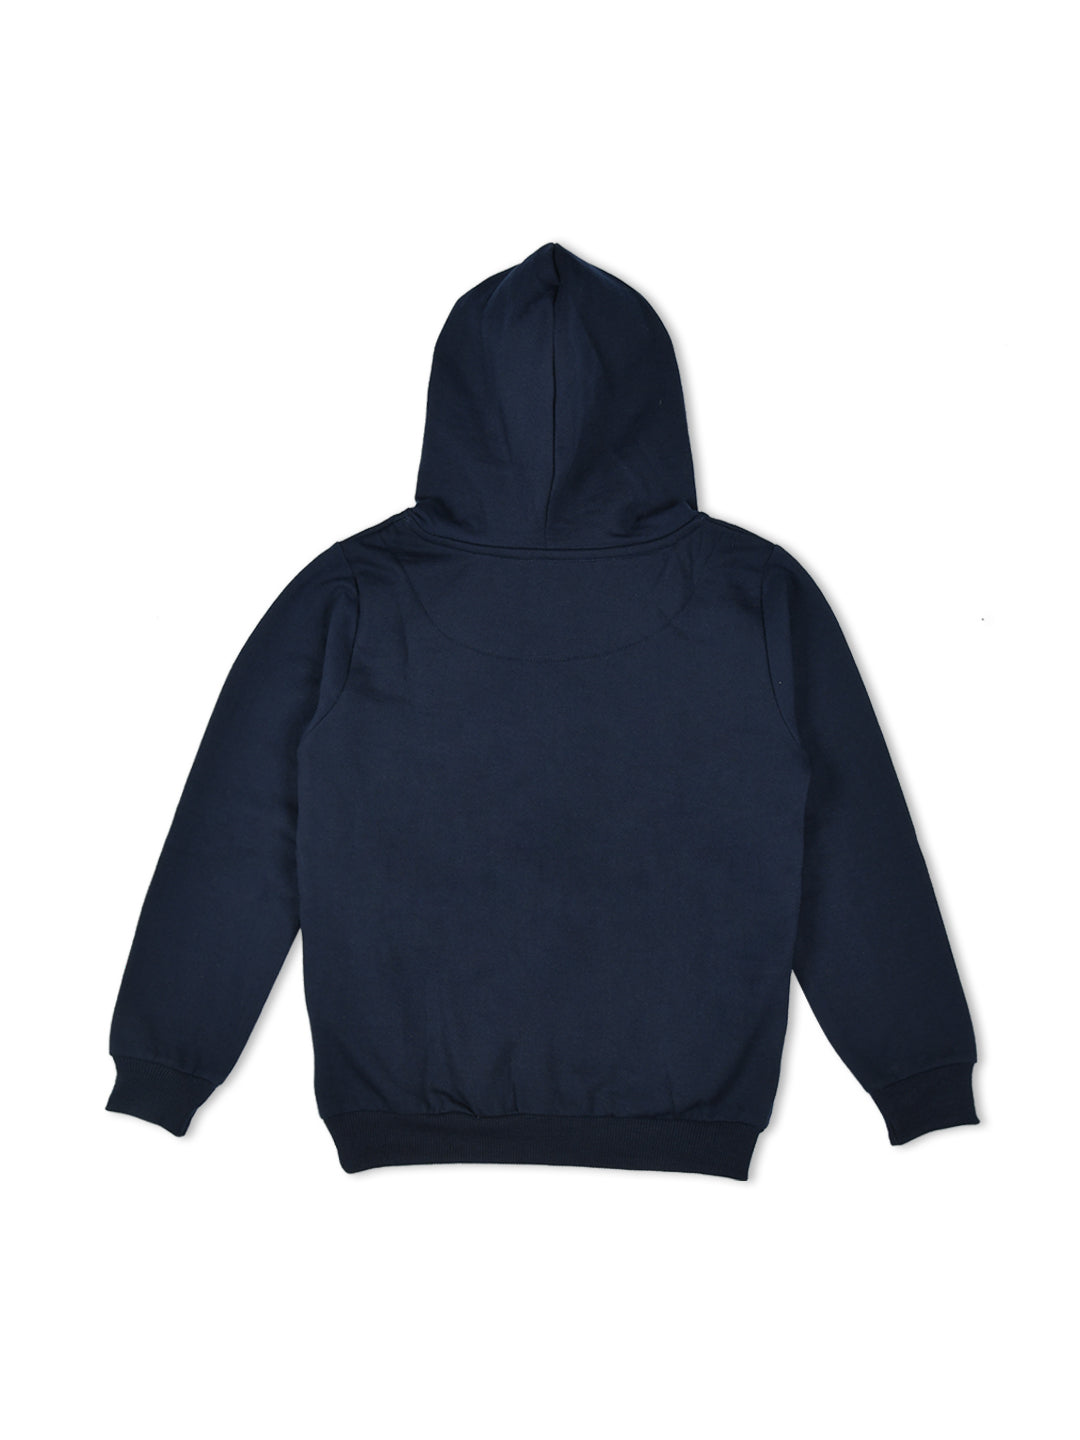 Navy Blue Cotton Fleece Unisex Kids Hooded Sweatshirt